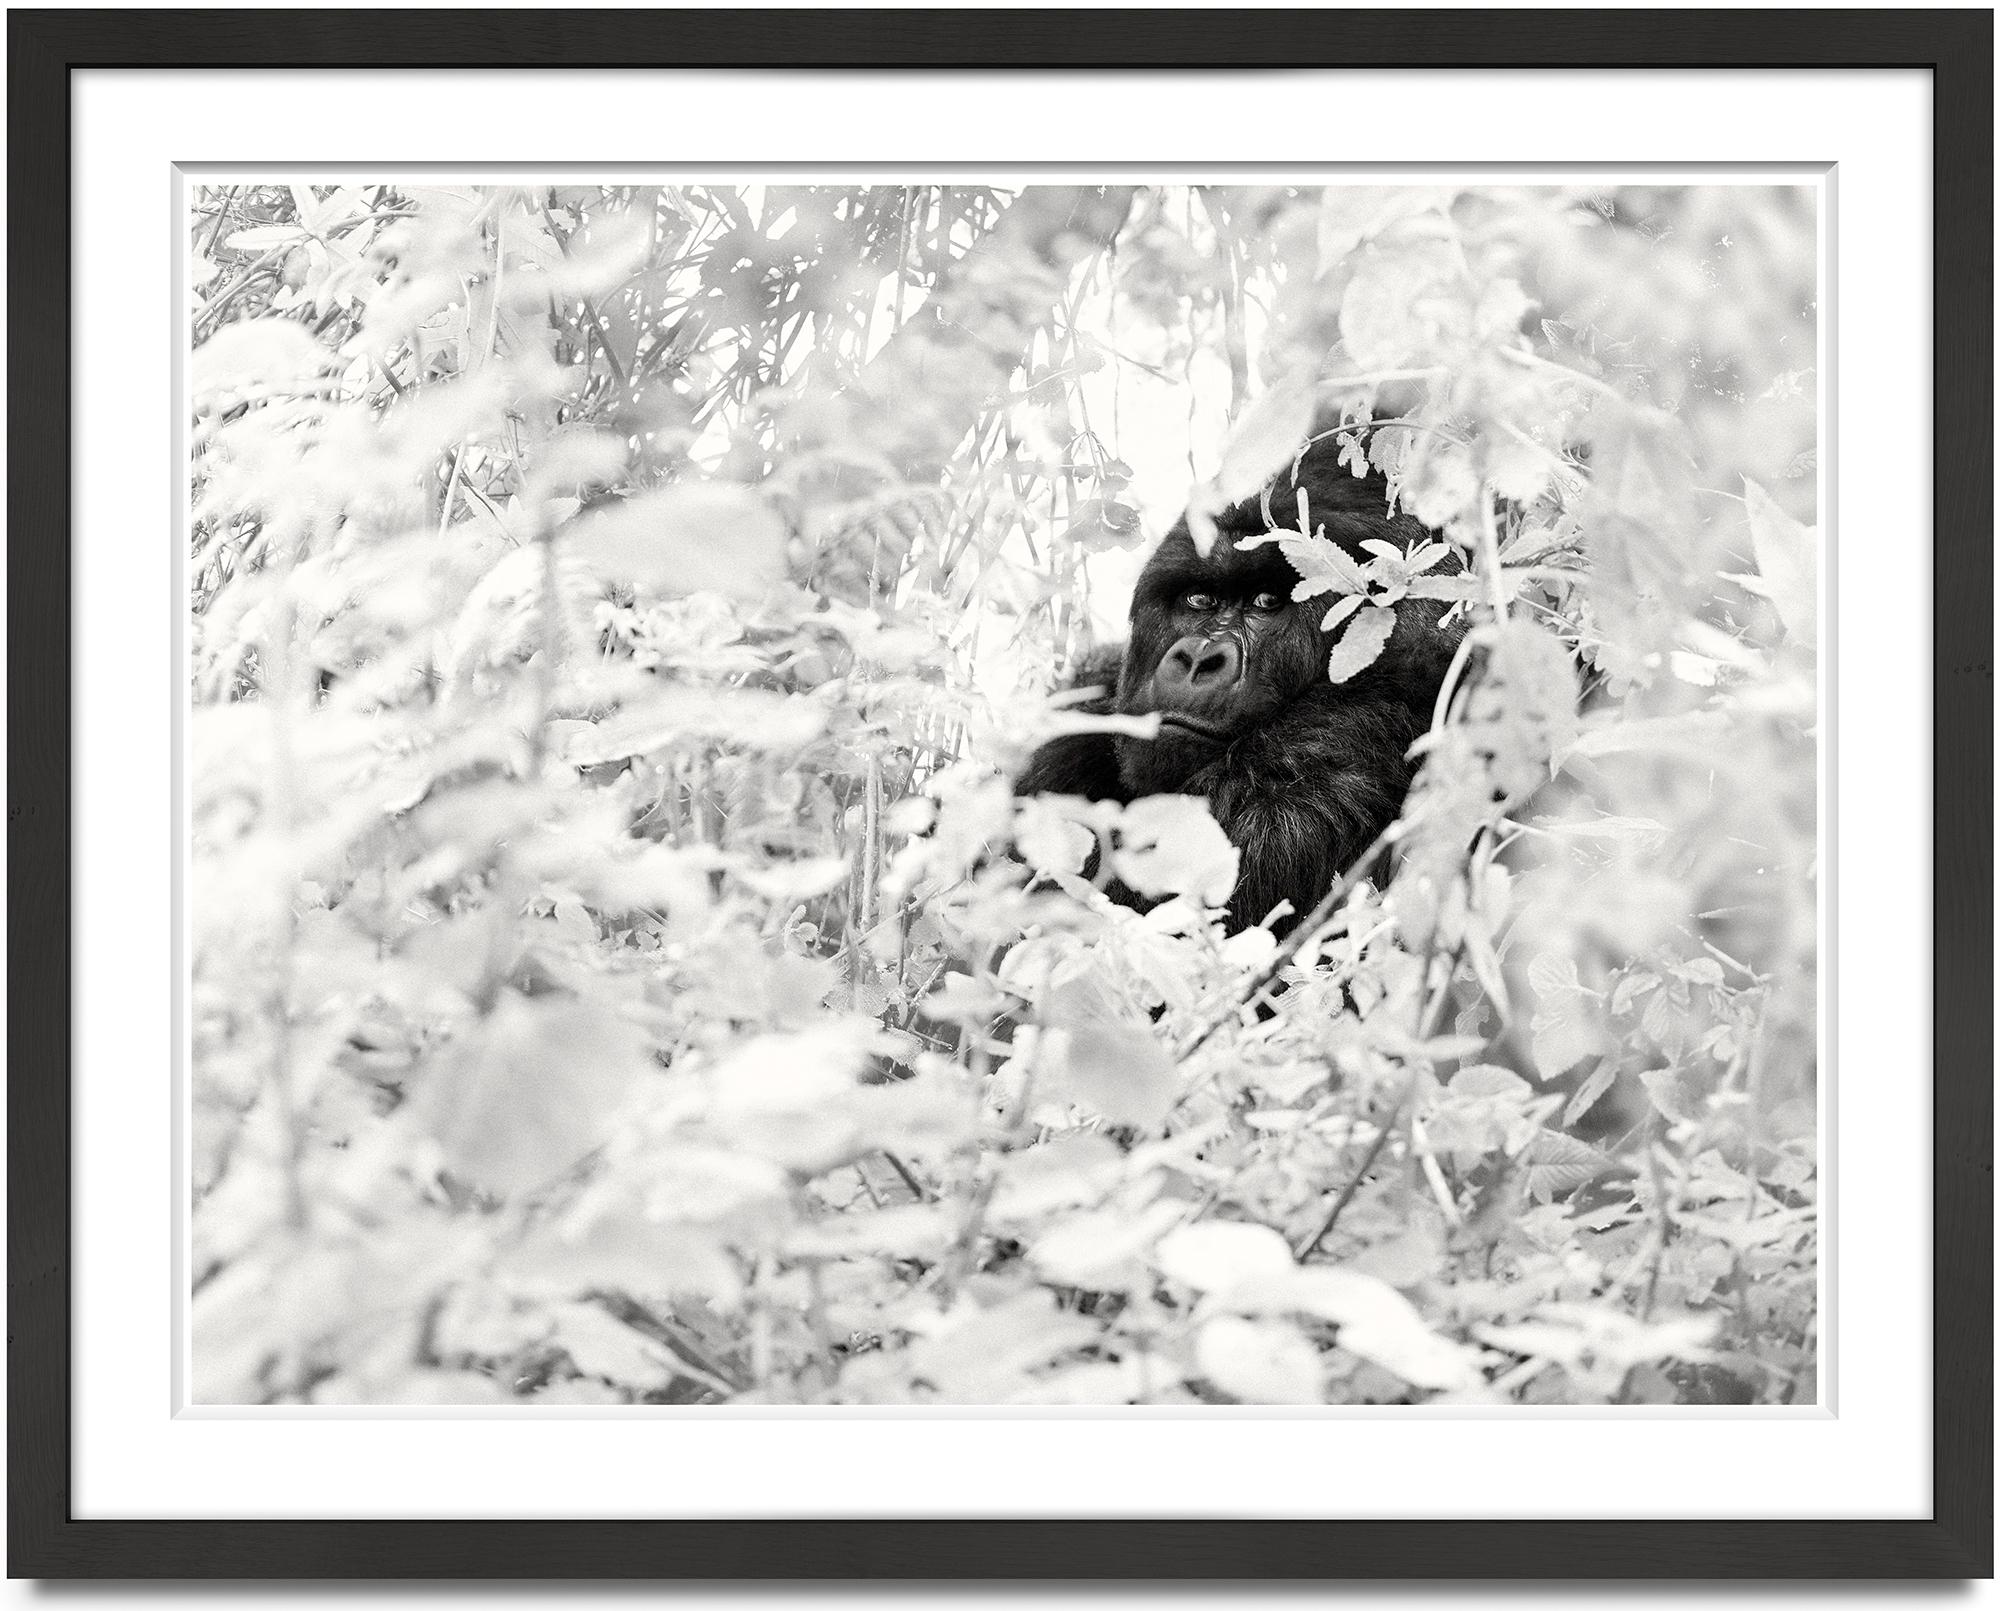 Reflection, animal, wildlife, black and white photography, gorilla, africa - Photograph by Joachim Schmeisser